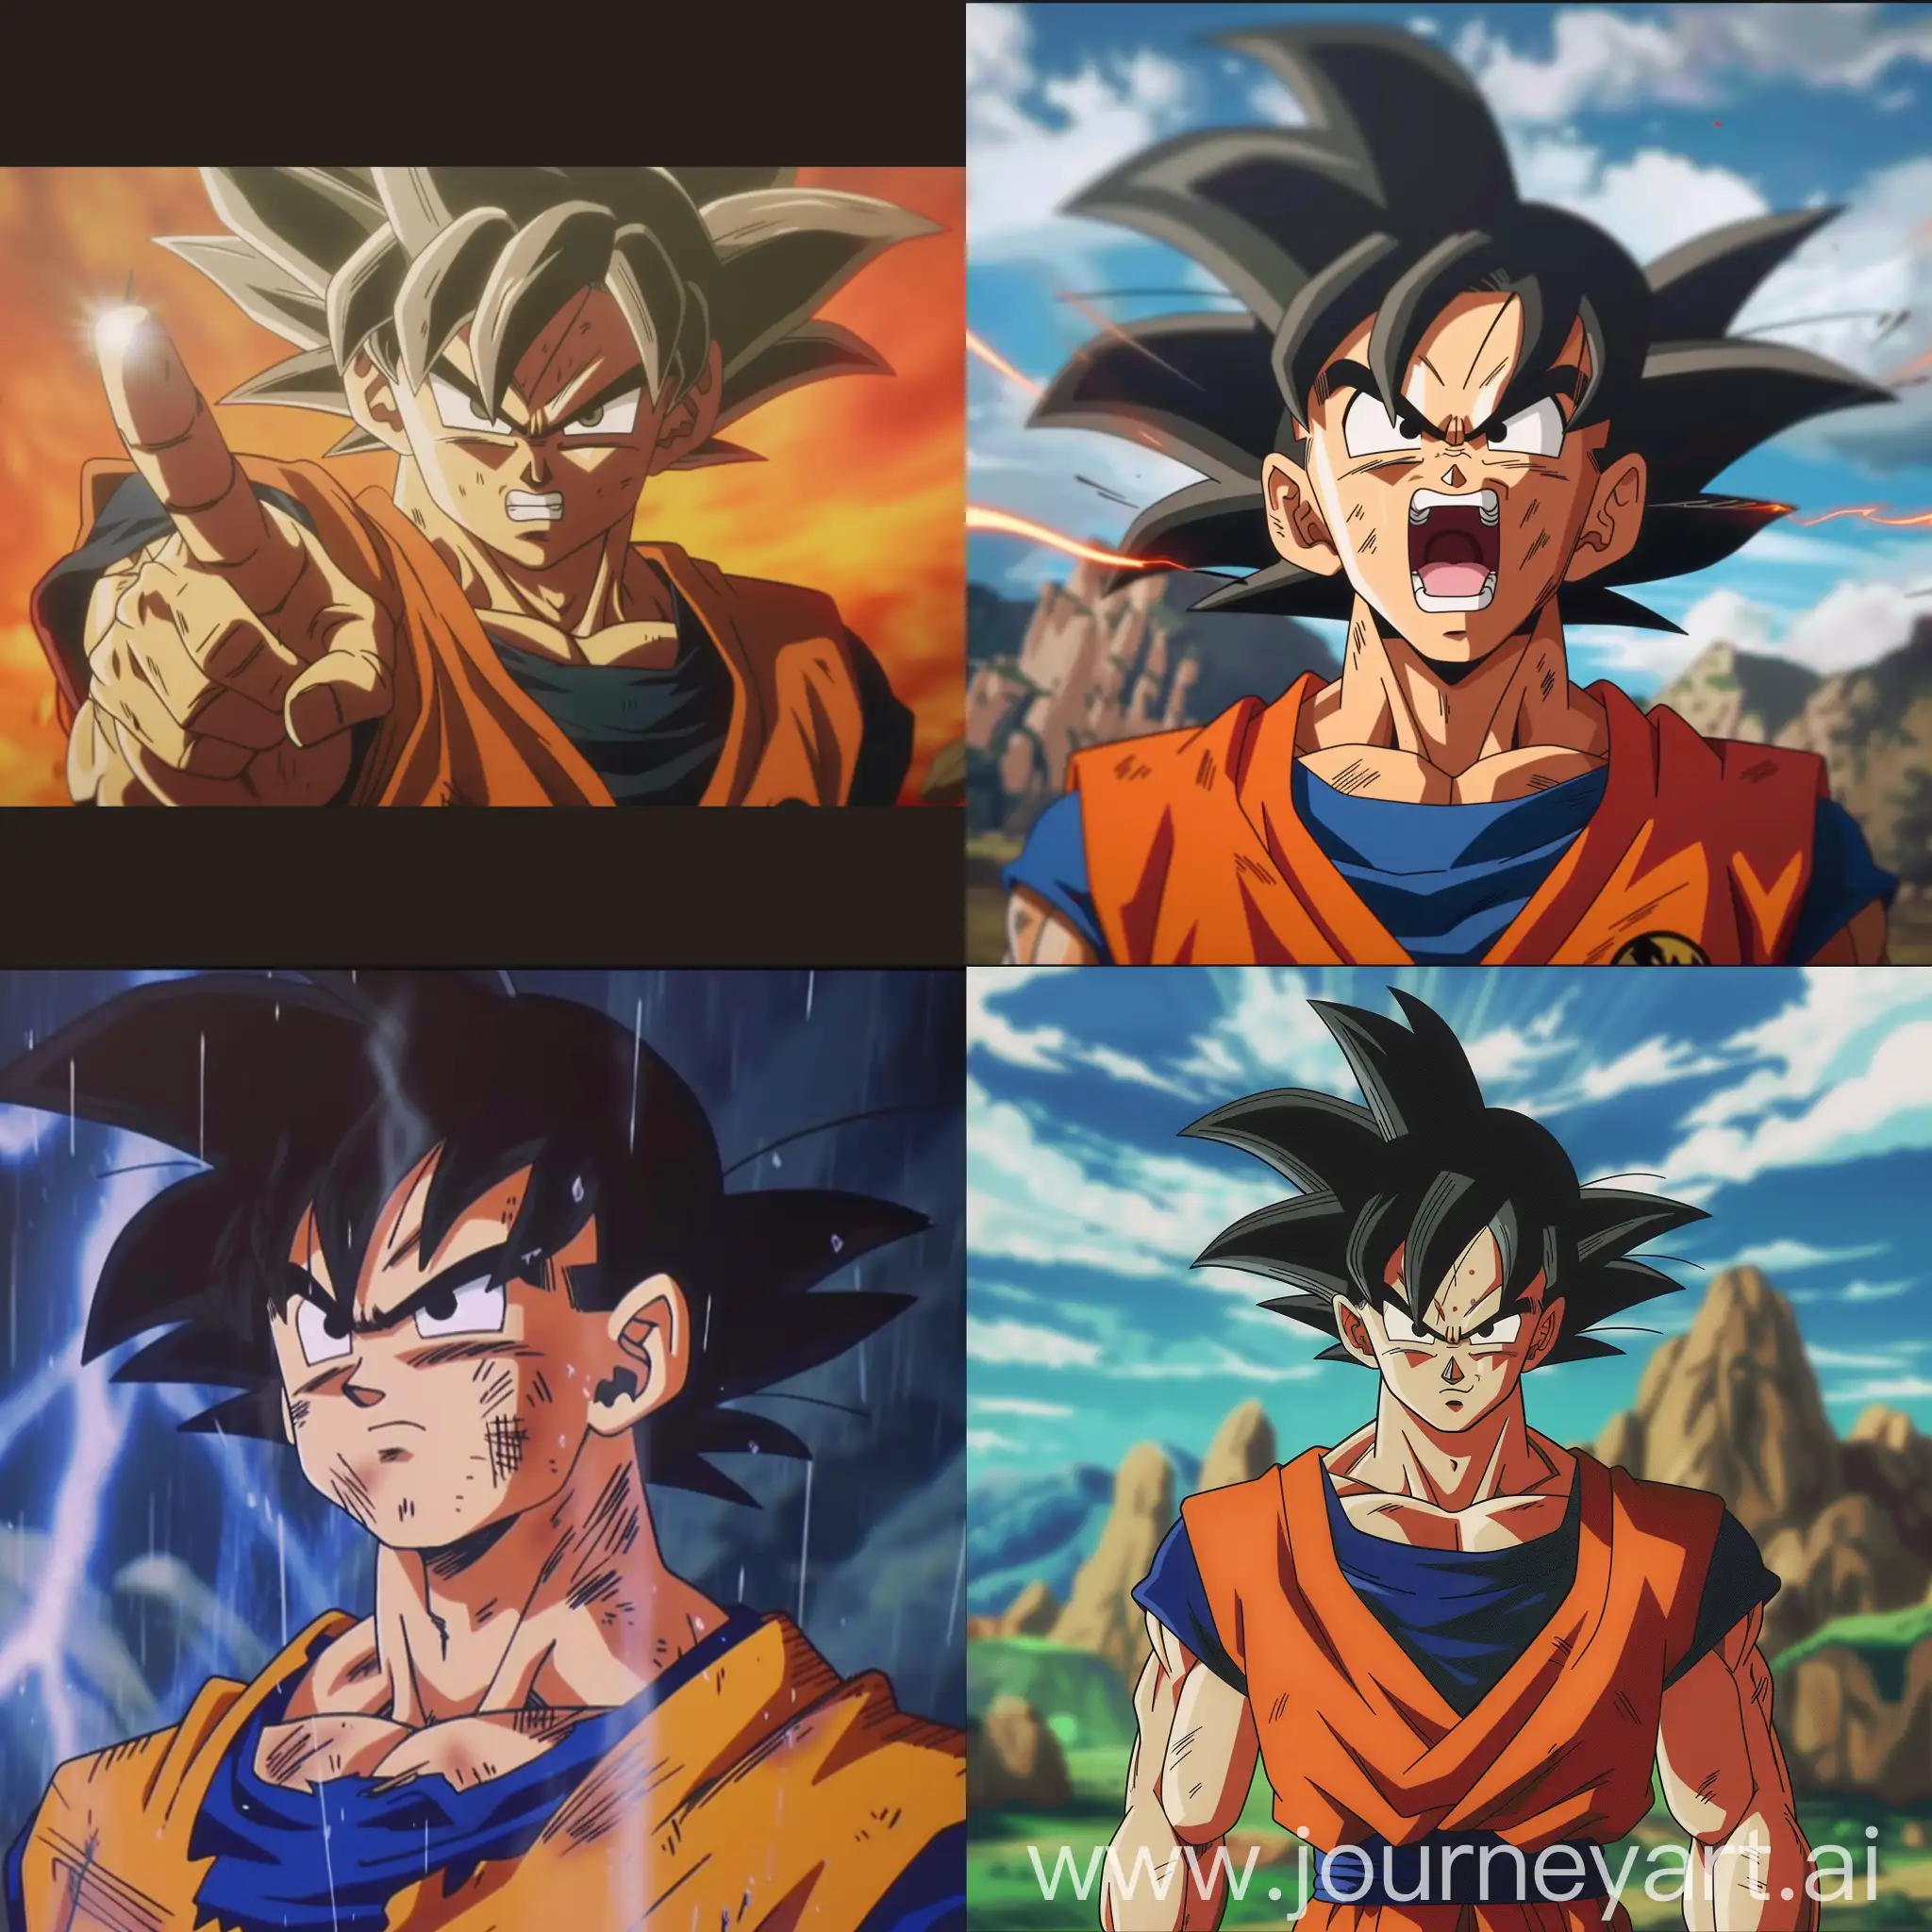 Final-Showdown-Goku-vs-Vegeta-in-Dragon-Ball